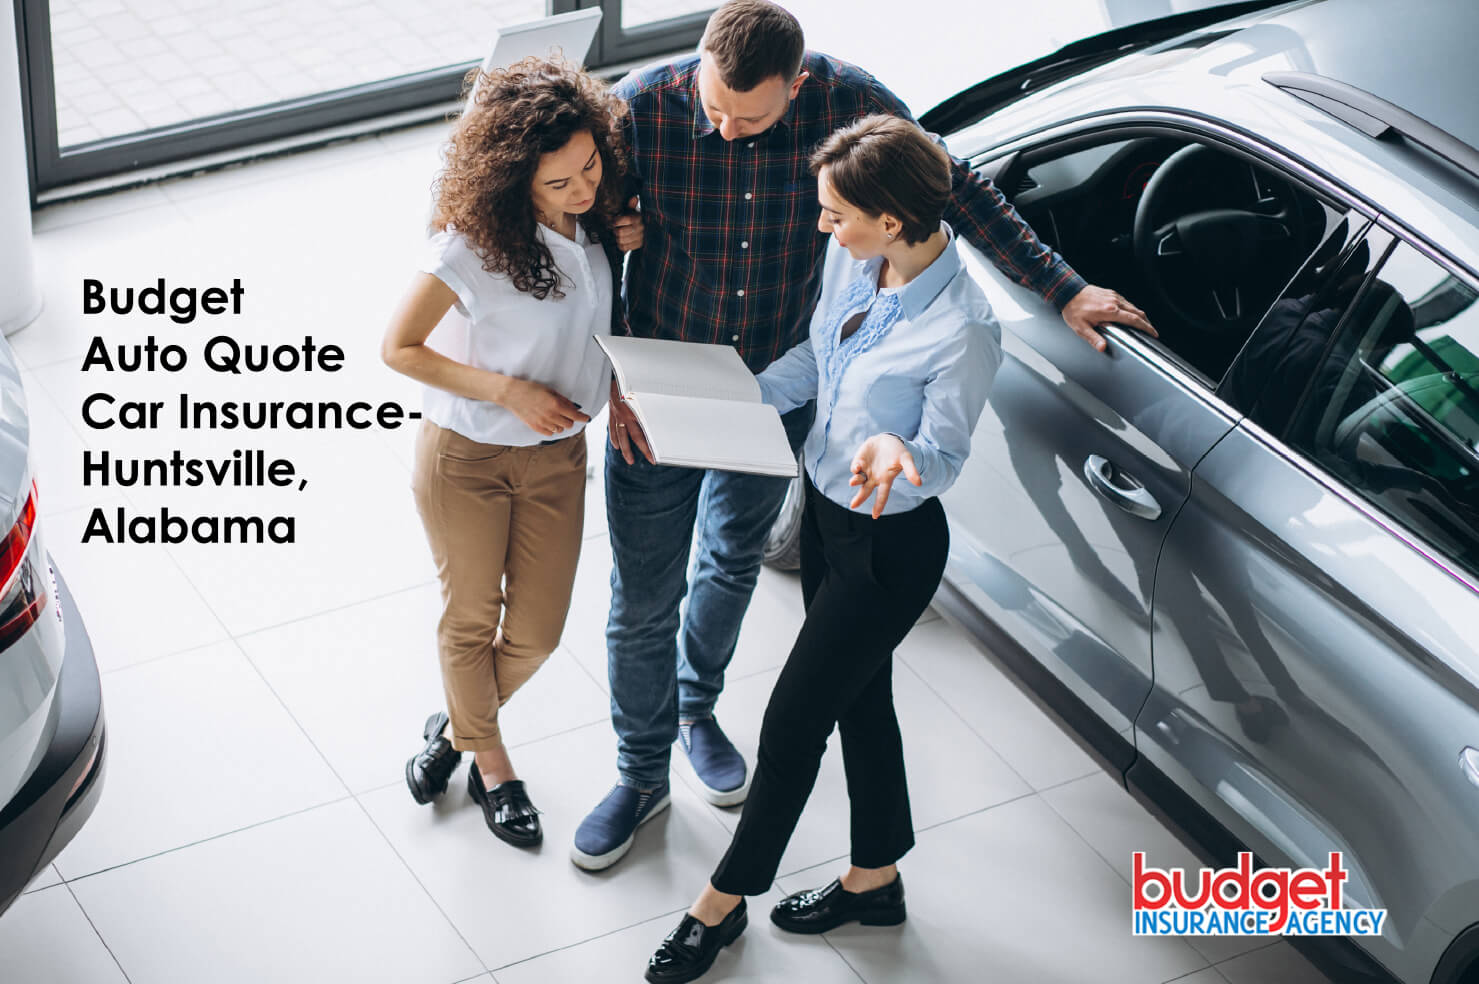 Budget Auto Quote Car Insurance - Huntsville, Alabama